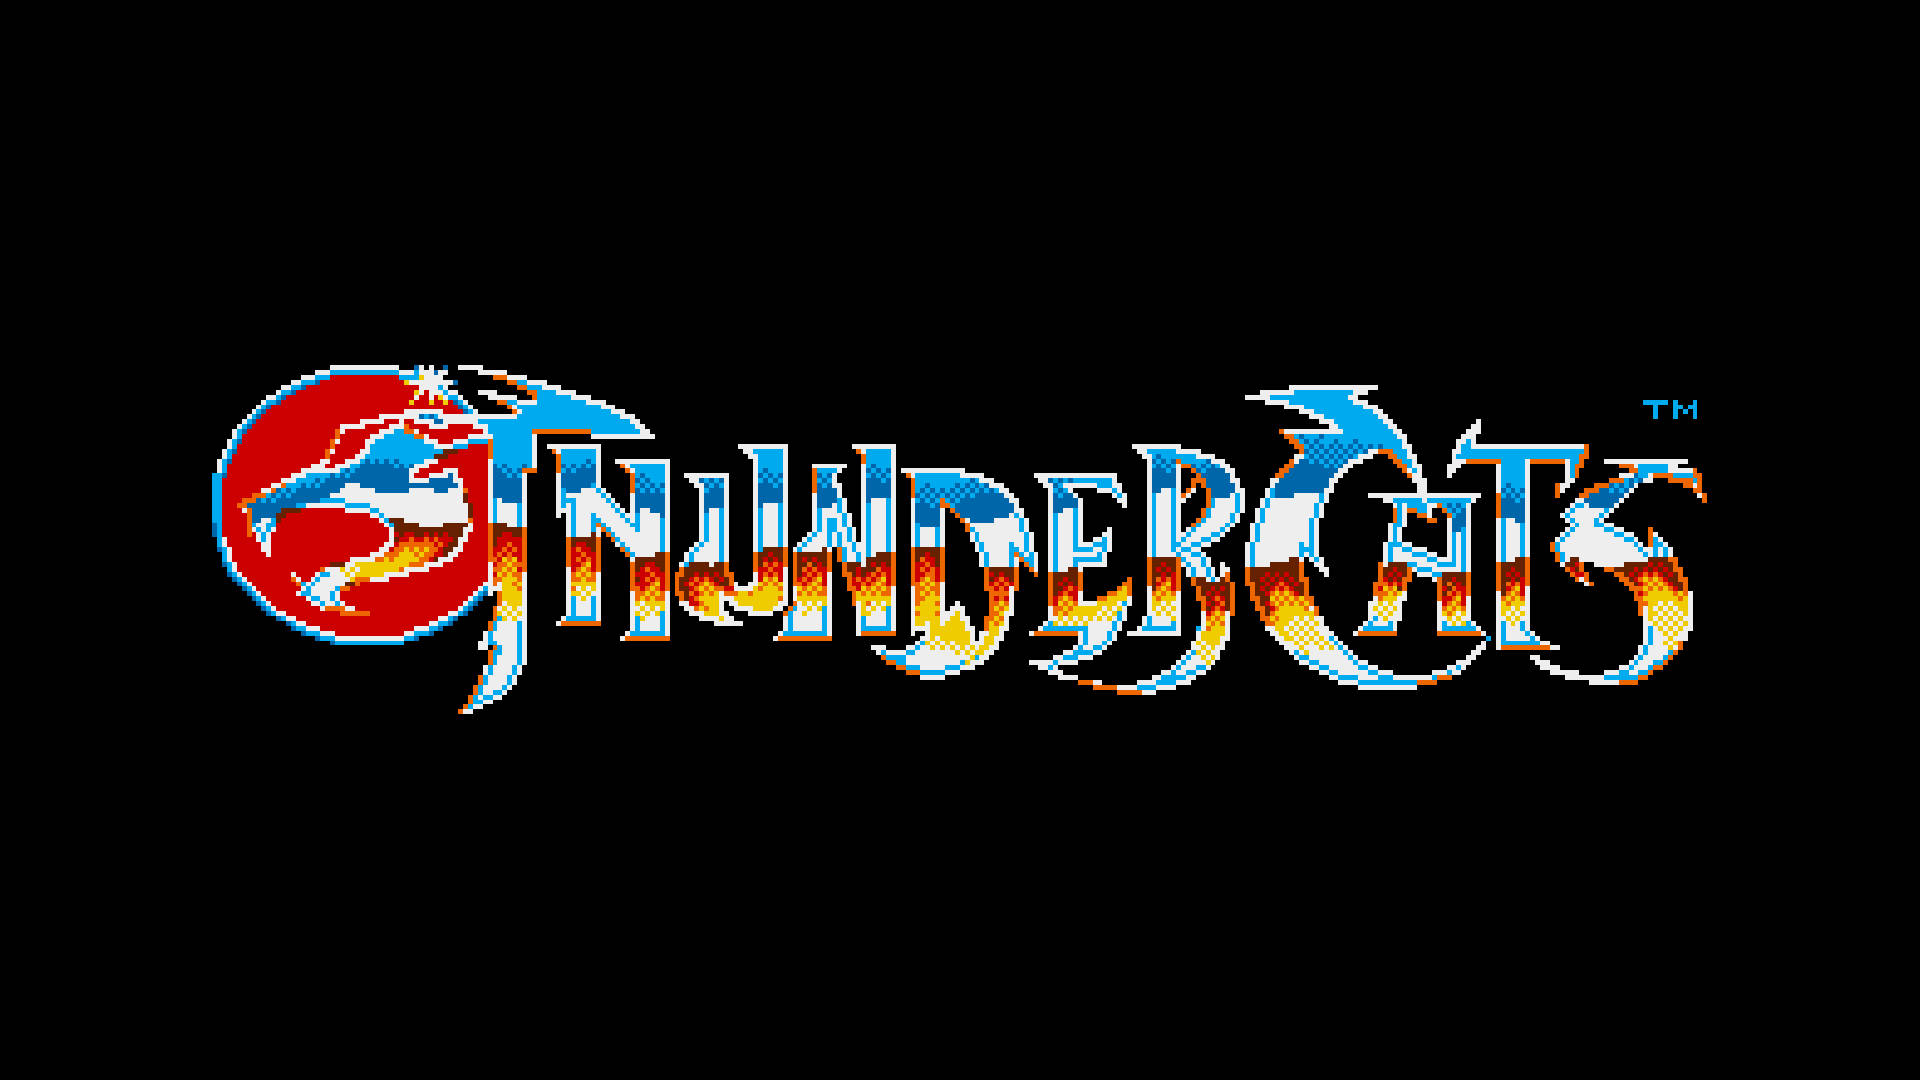 Thundercats (1985) Wallpapers